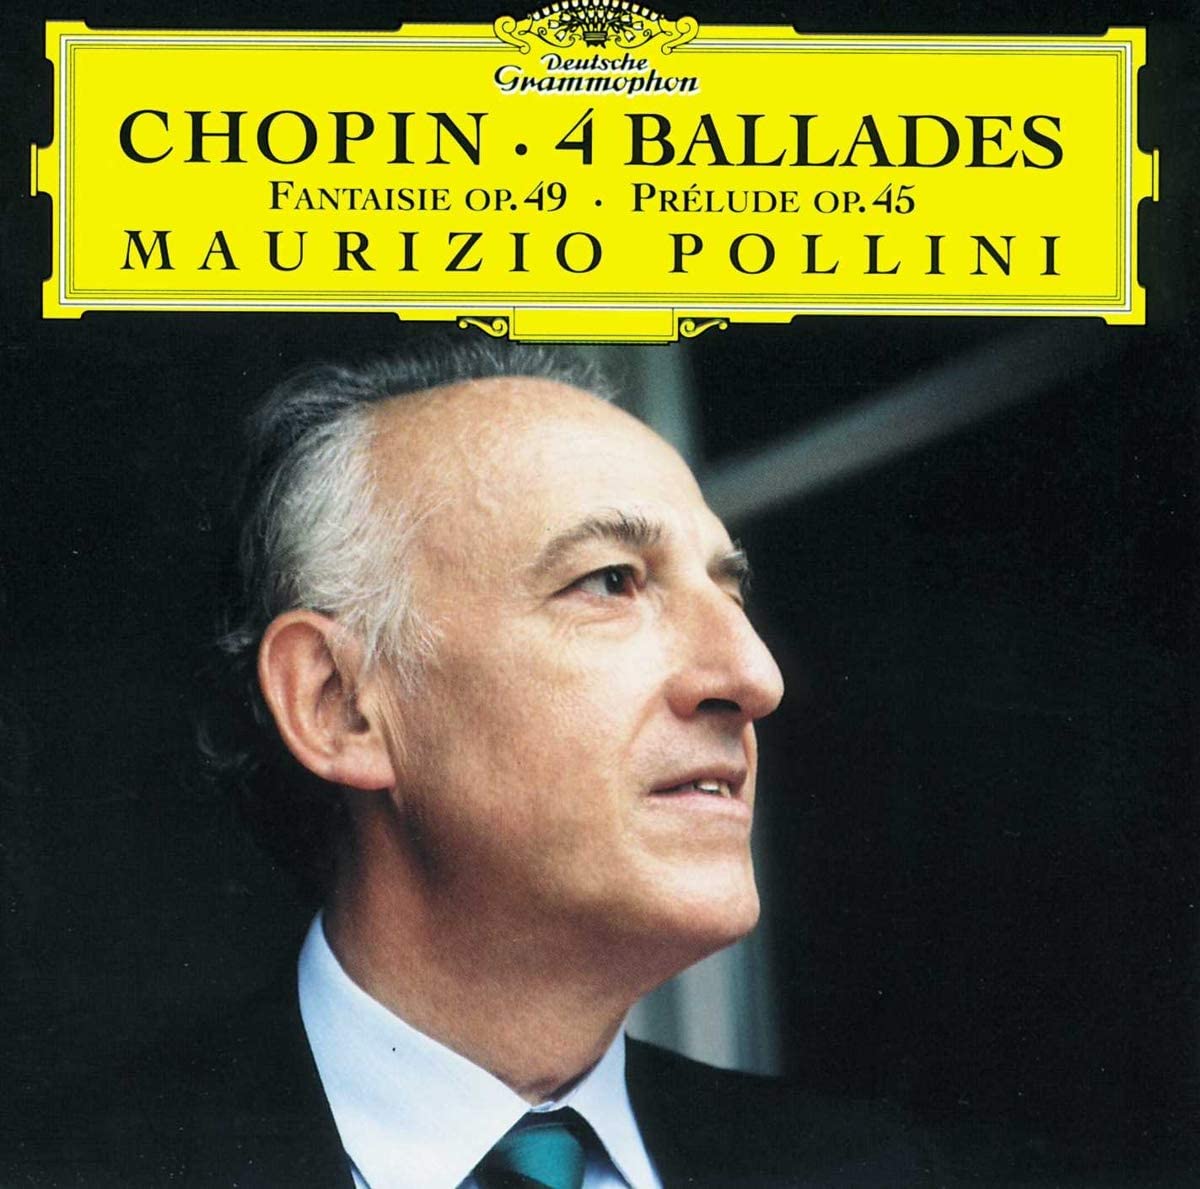 Chopin: 4 Ballades, Fantaisie Op. 49, Prelude Op. 45 | Maurizio Pollini image